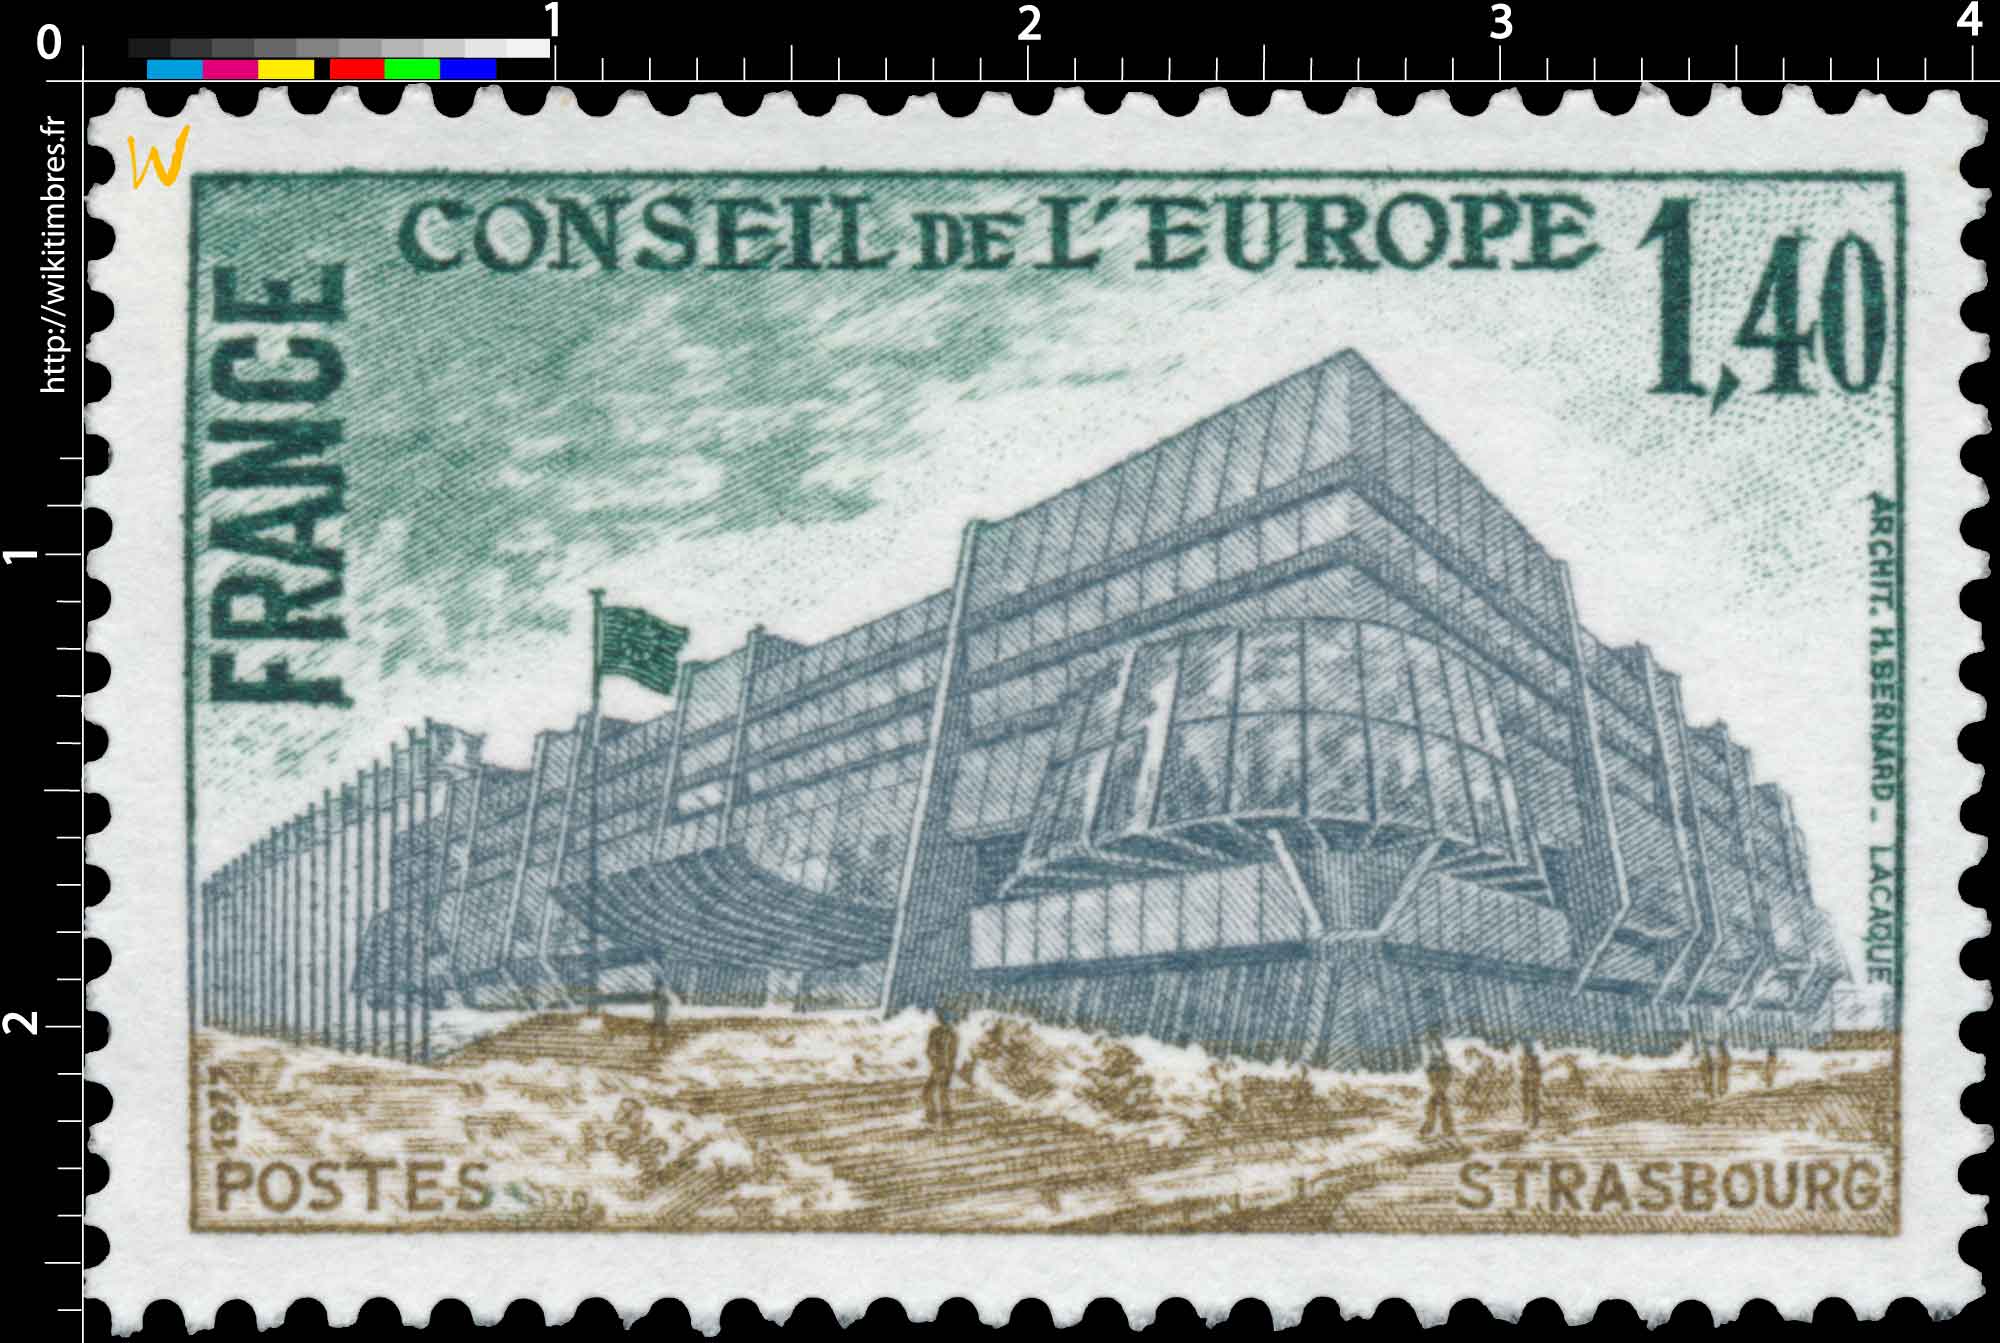 1977 CONSEIL DE L'EUROPE STRASBOURG